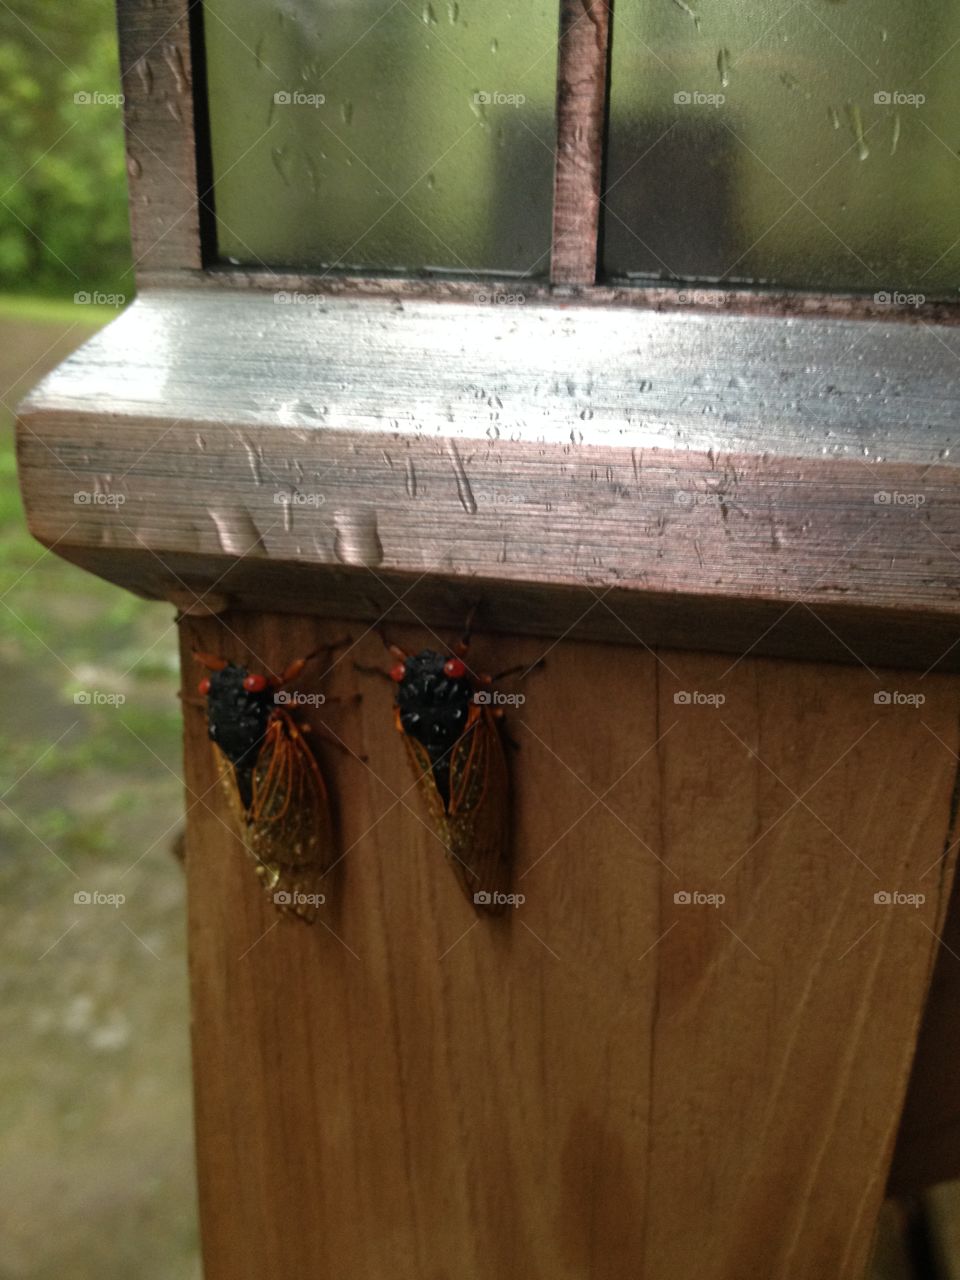 Year of the cicadas 